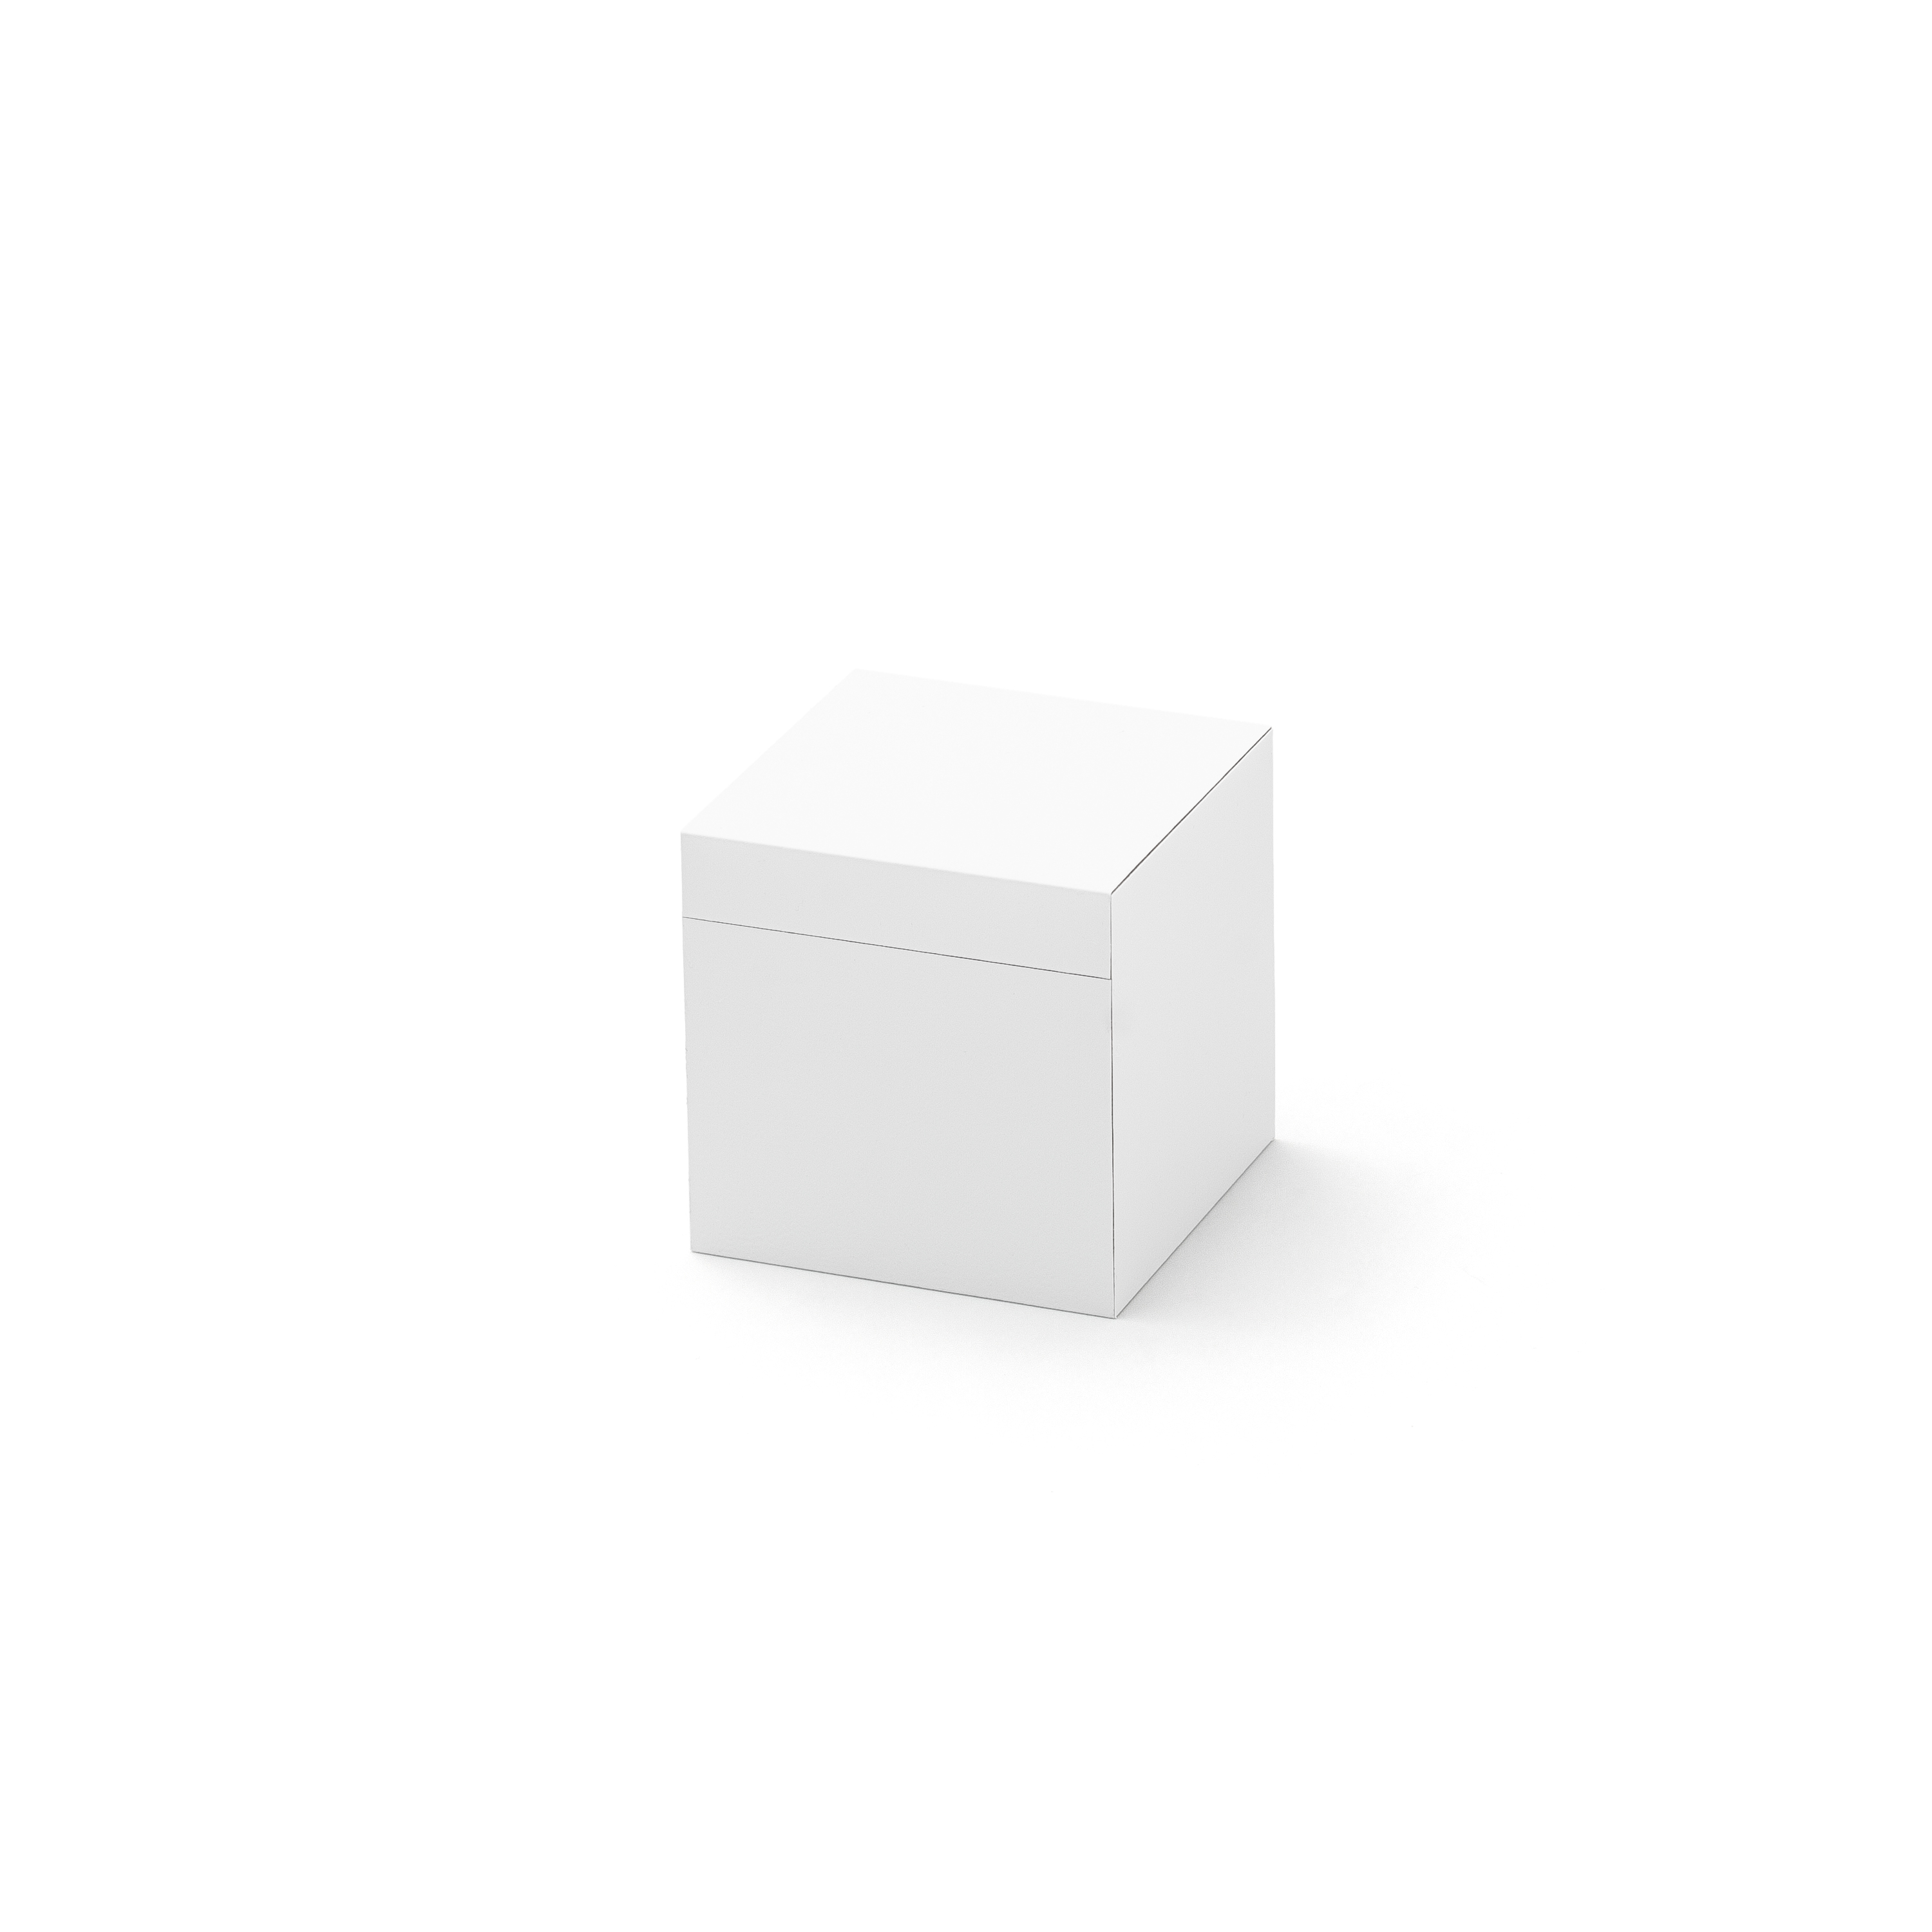 Whitebox Ring, 50 x 50 x 50 mm